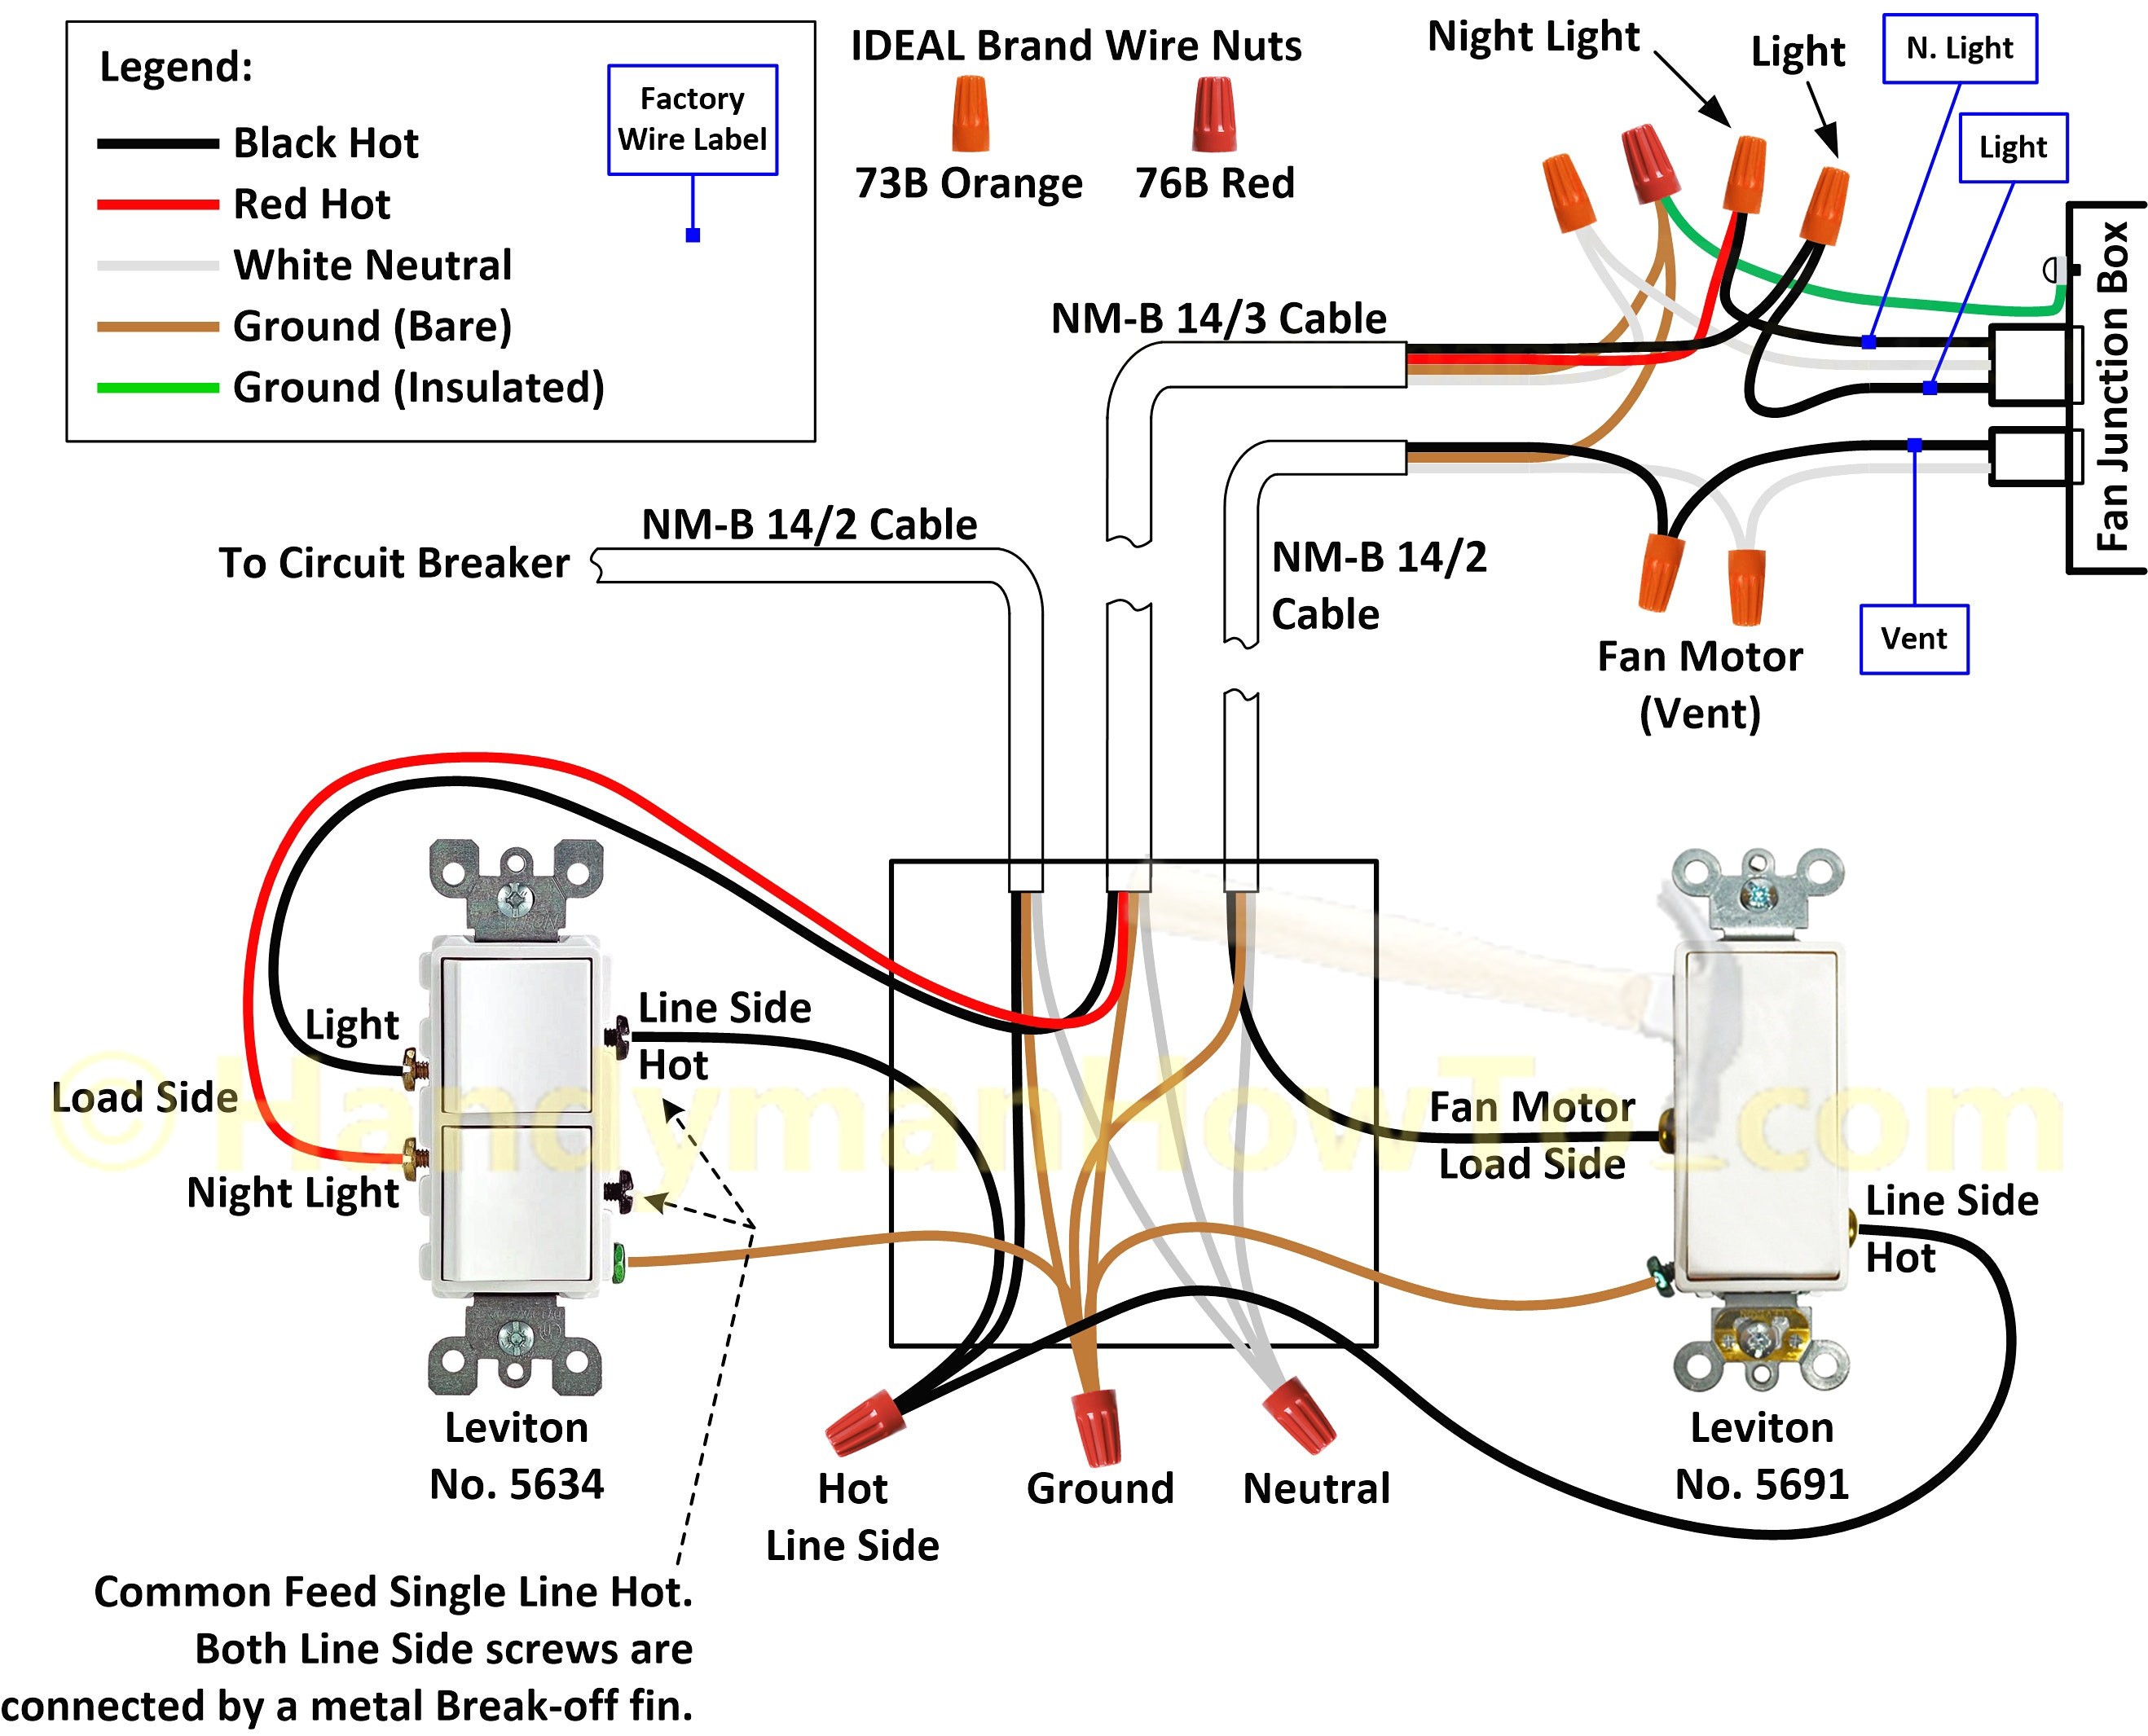 Wiring Diagram for Race Car Fresh Wiring Diagram for Legend Race Car Save Bajaj Legend Wiring